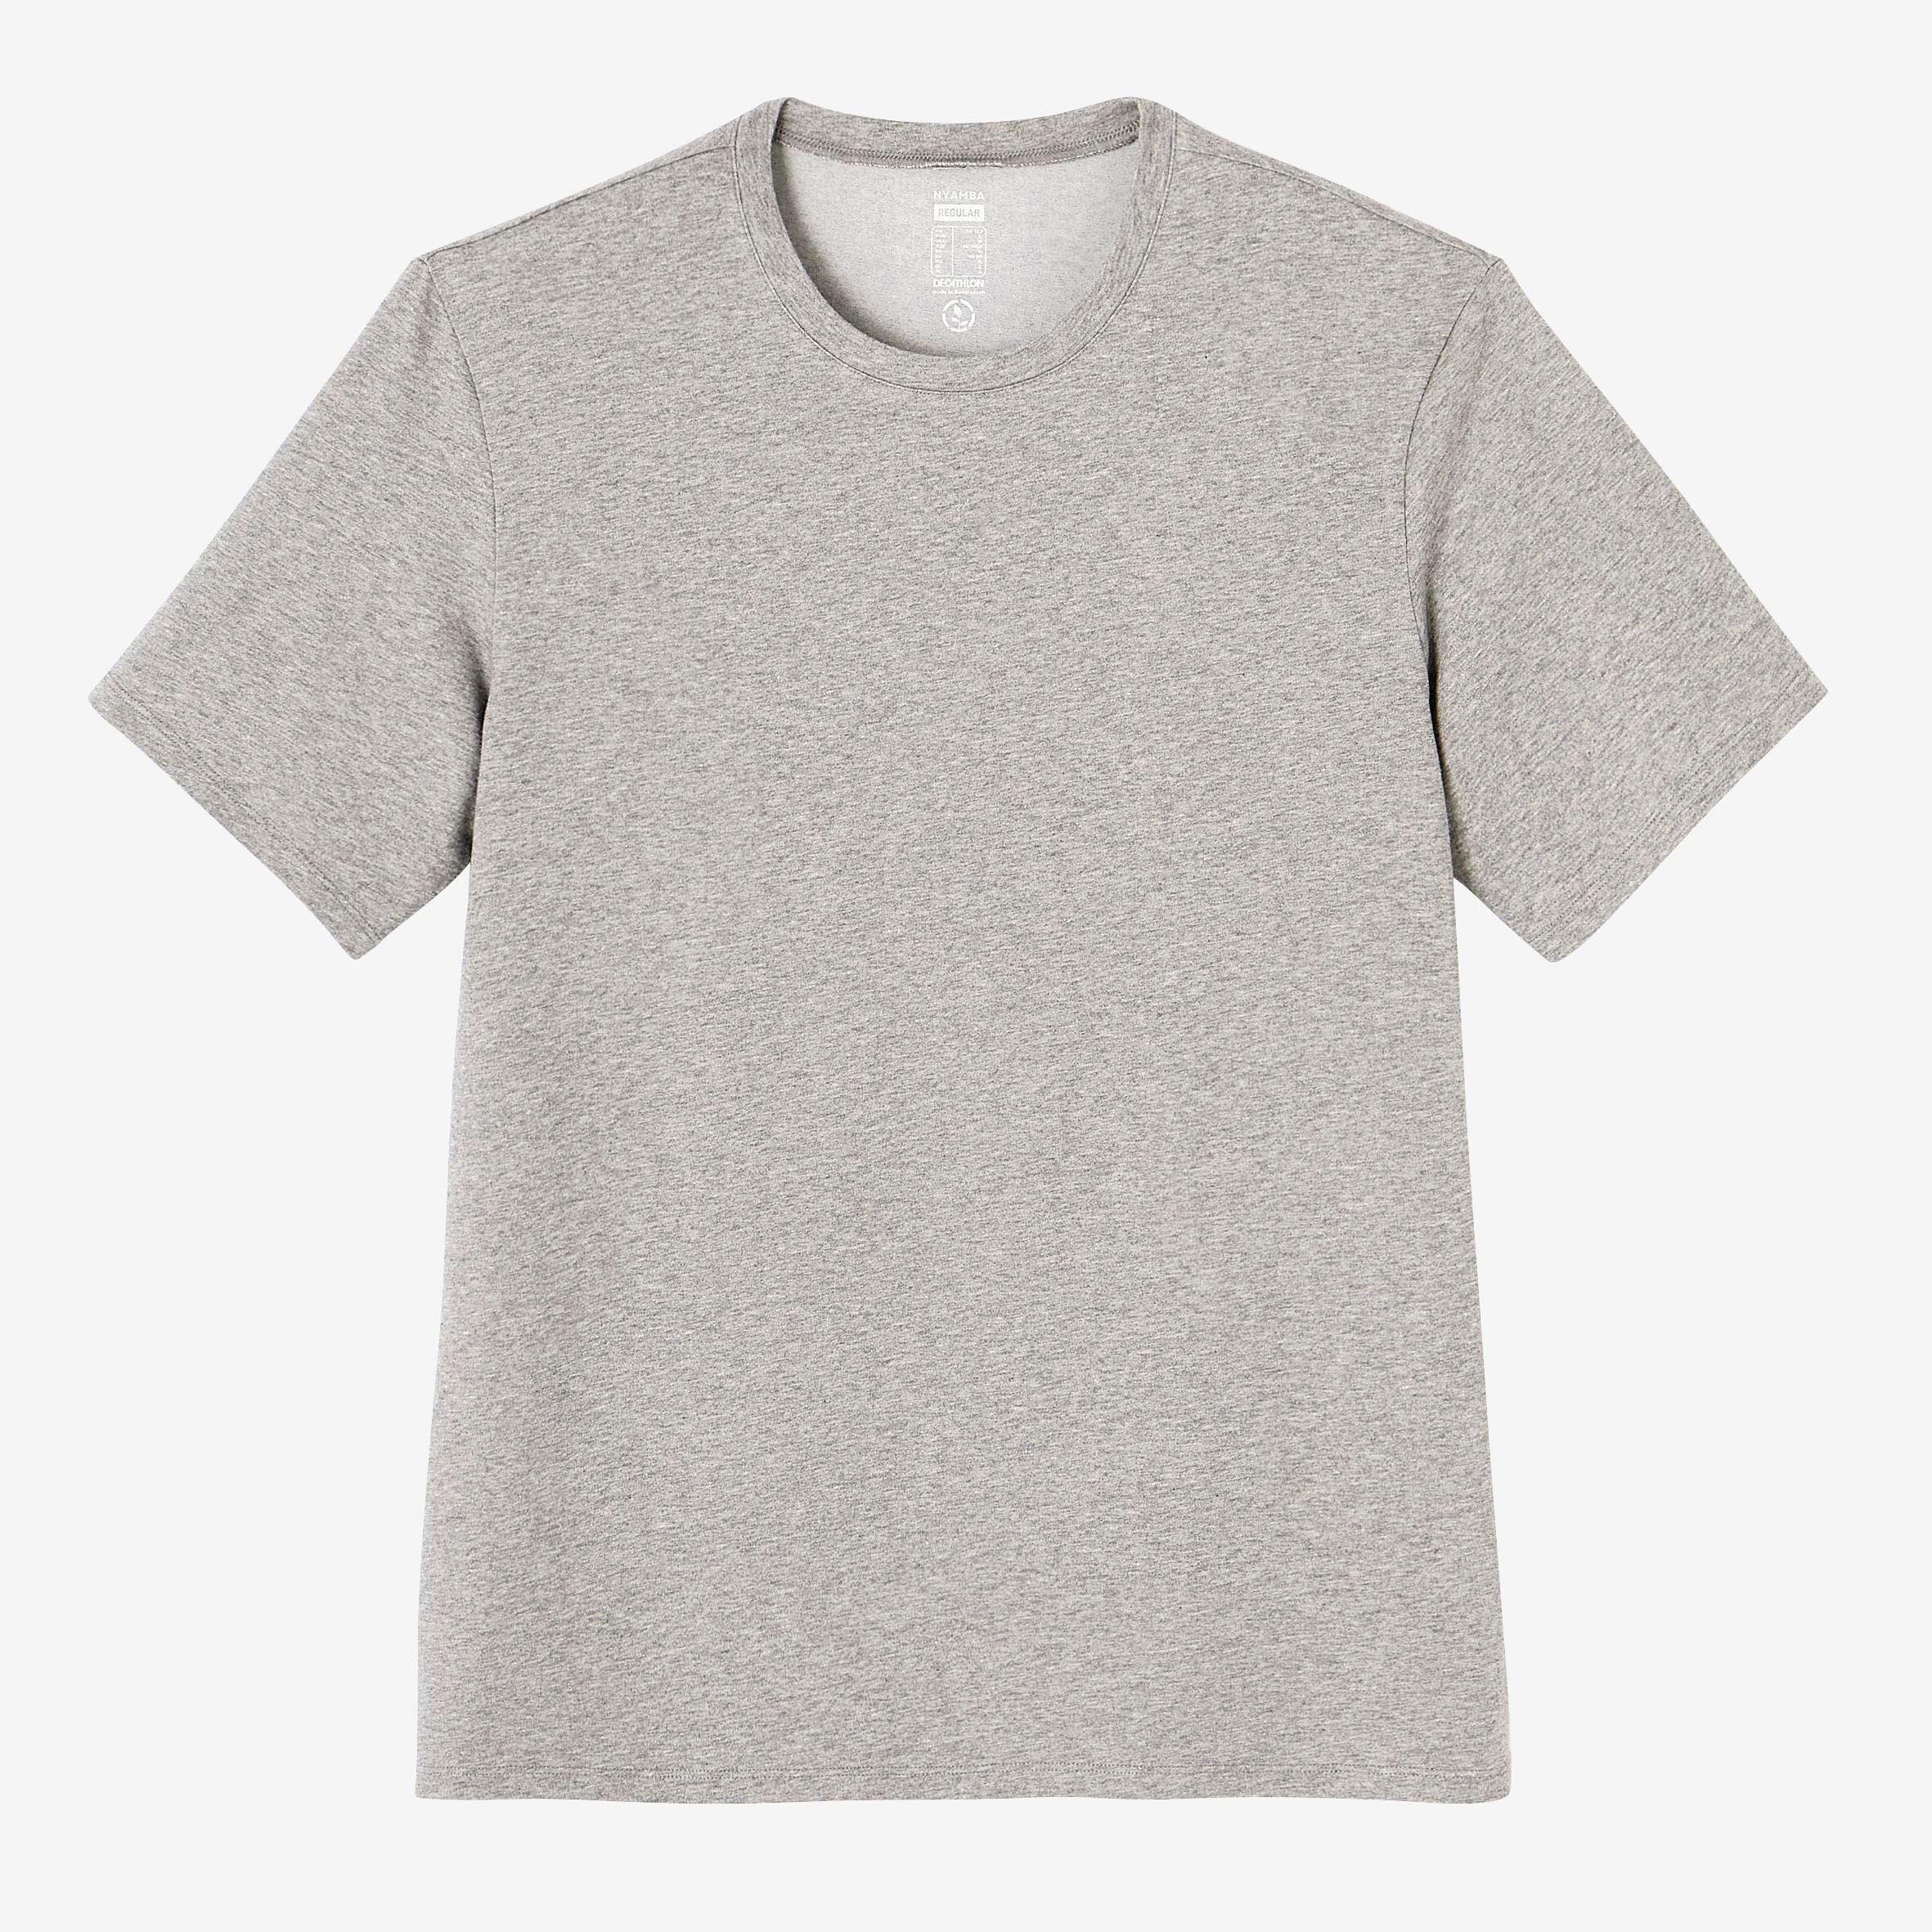 DOMYOS Men's Short-Sleeved Straight-Cut Crew Neck Cotton Fitness T-Shirt 500 Light Grey